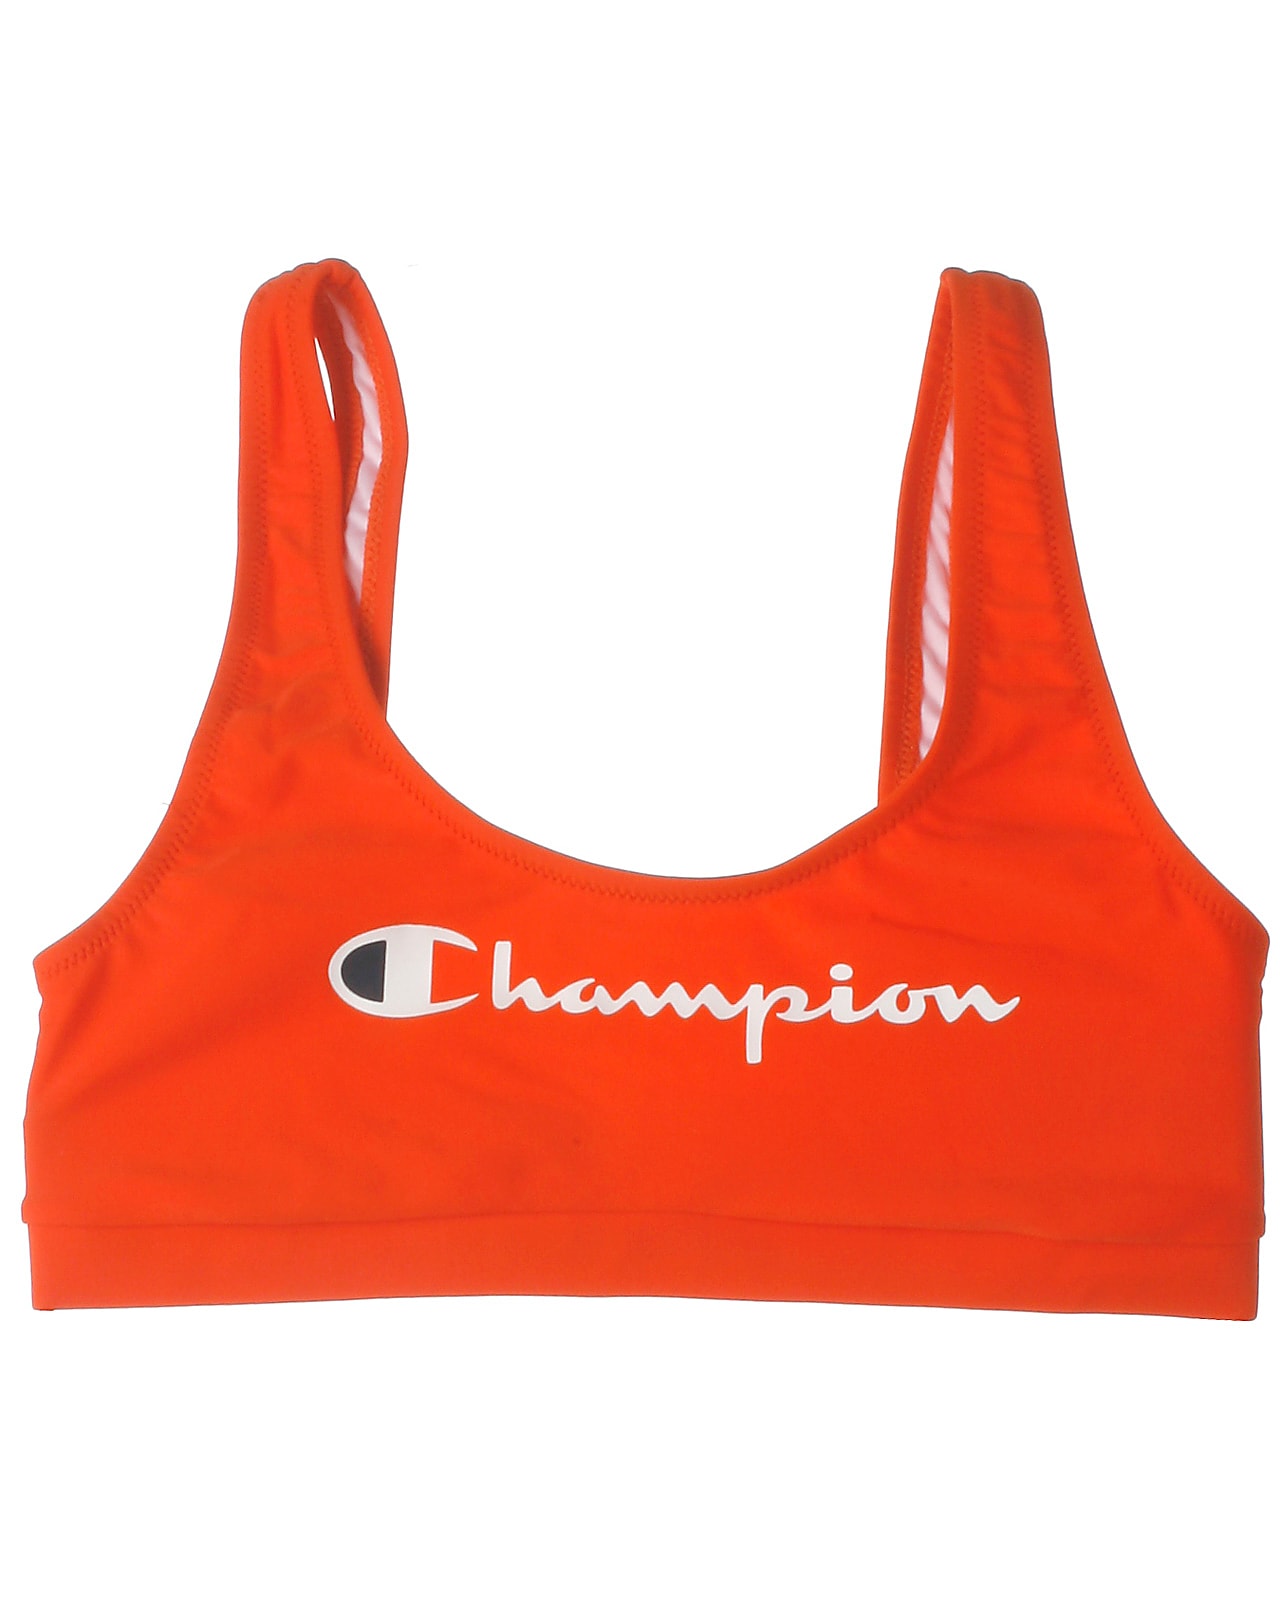 Champion bikini top